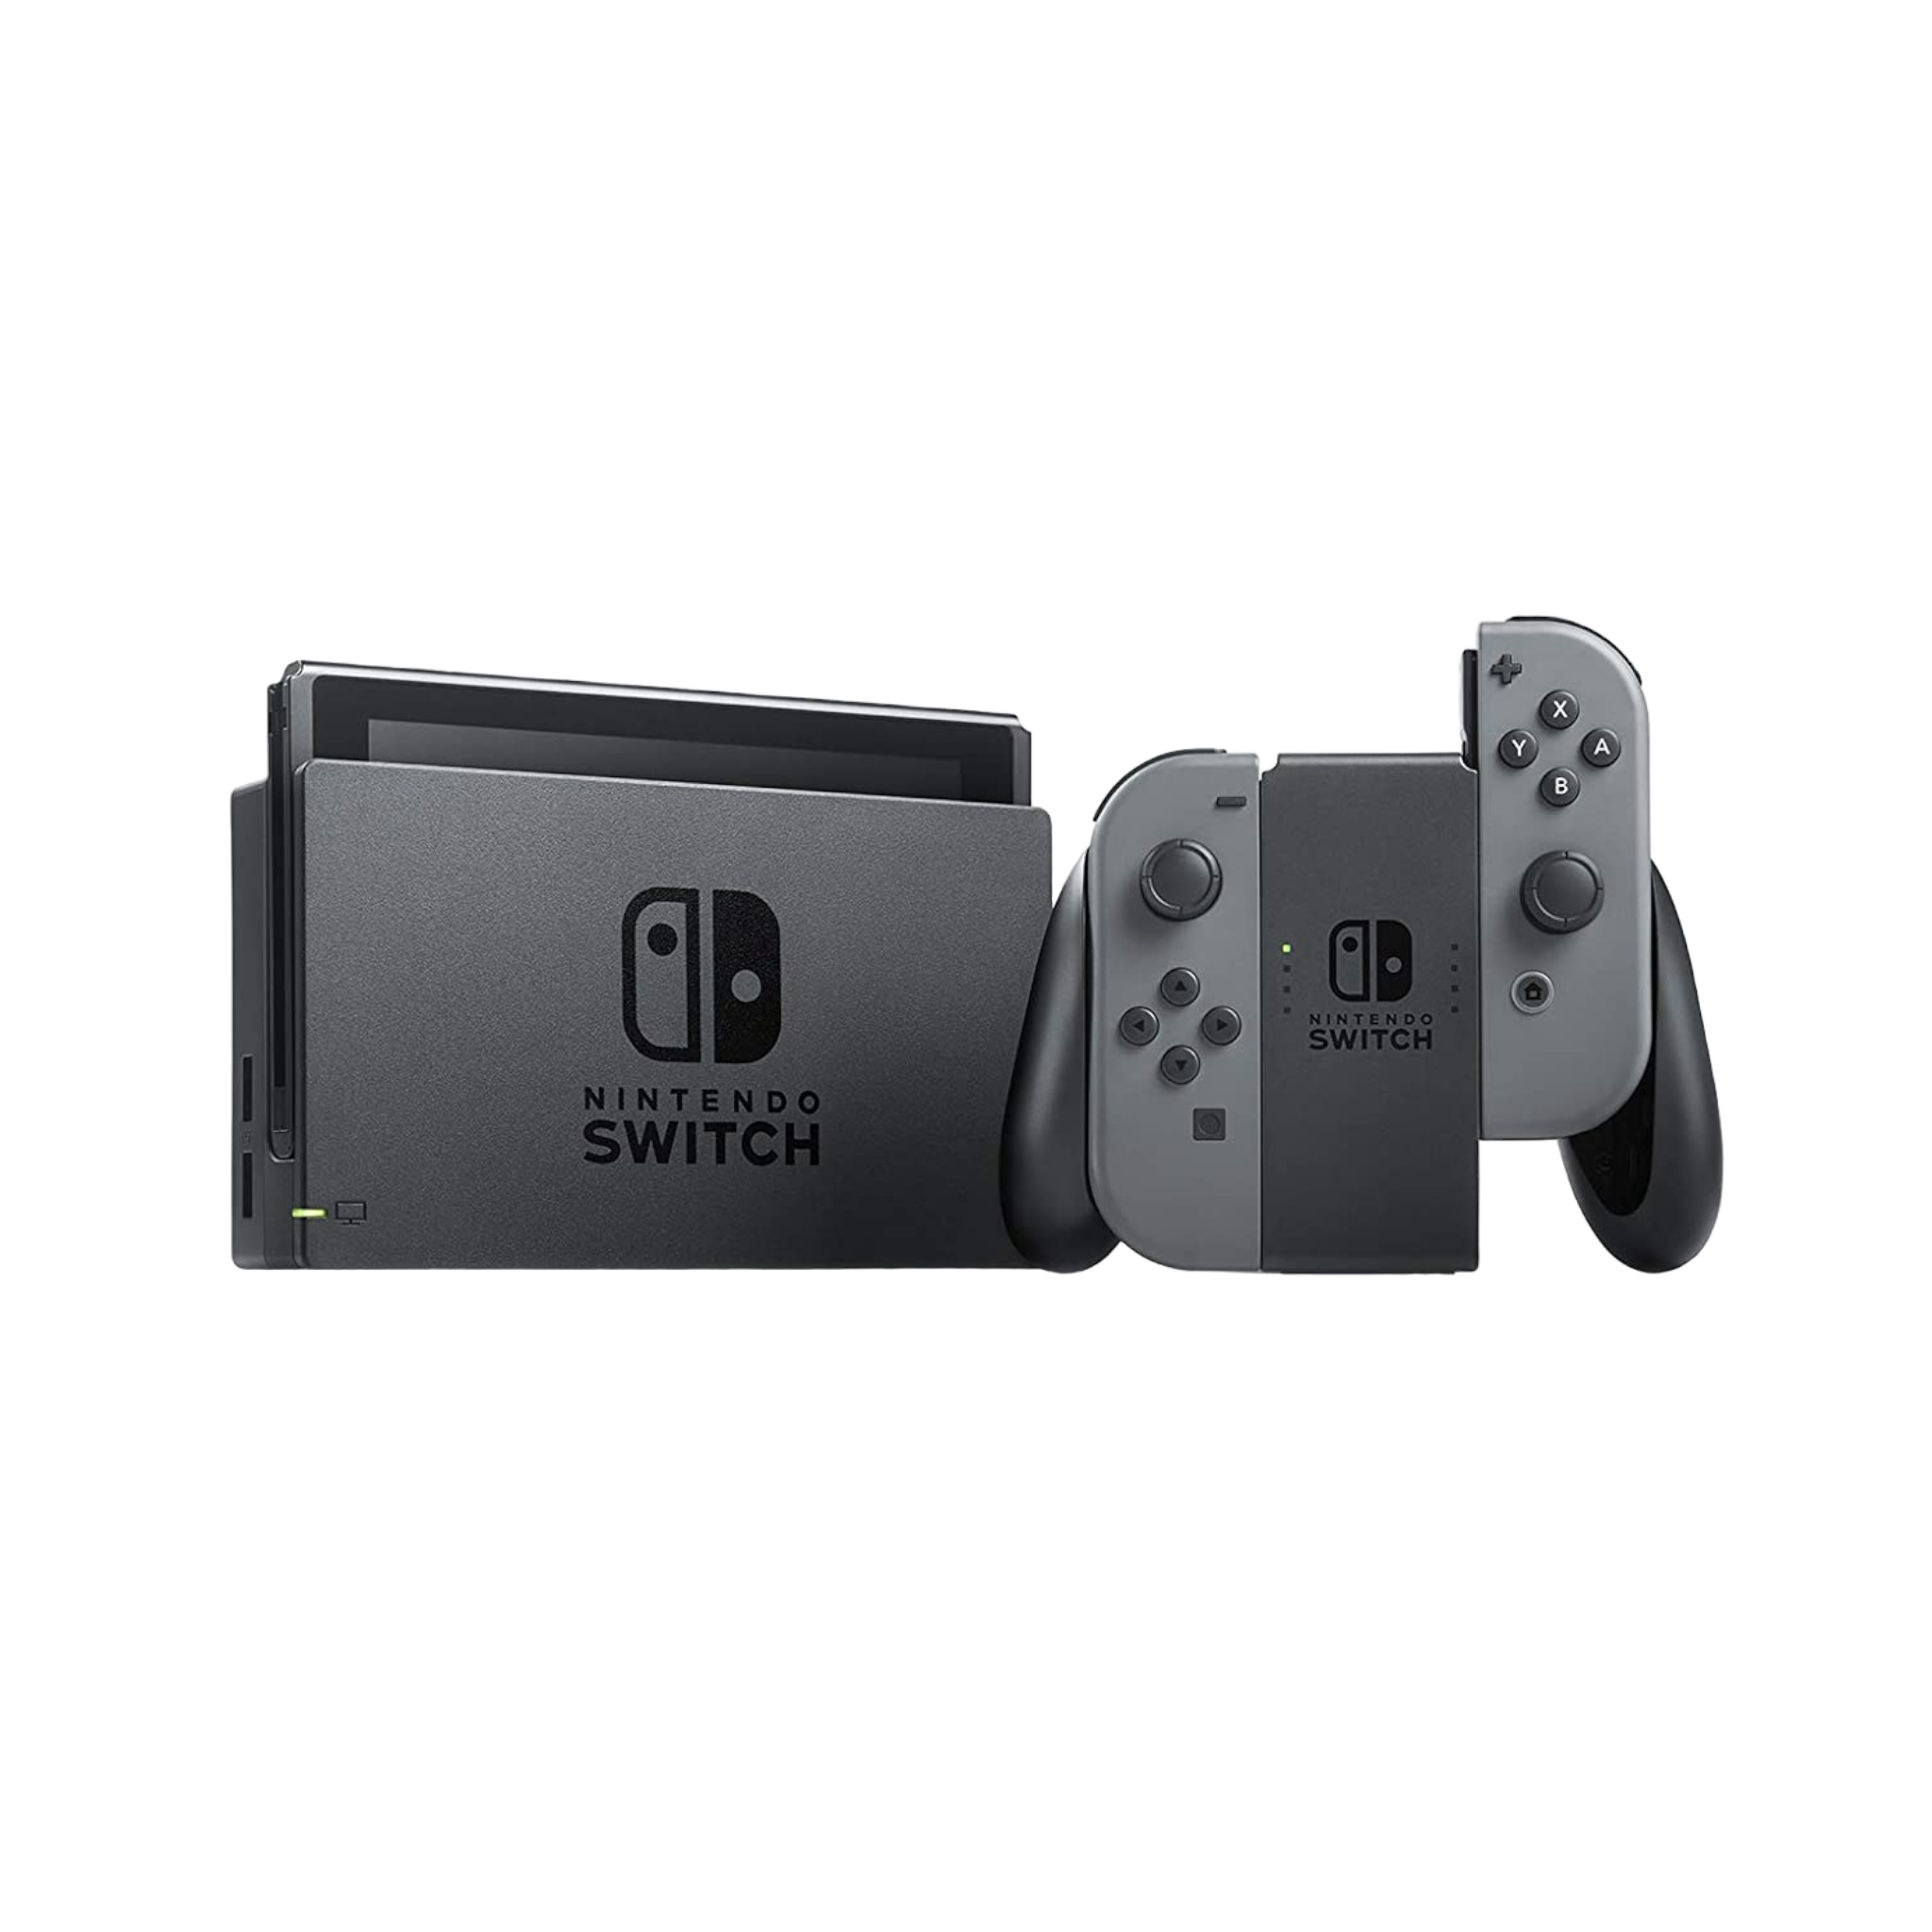 Nintendo Switch 32GB Console - Gray Joy-Con - New Version - Pro-Distributing